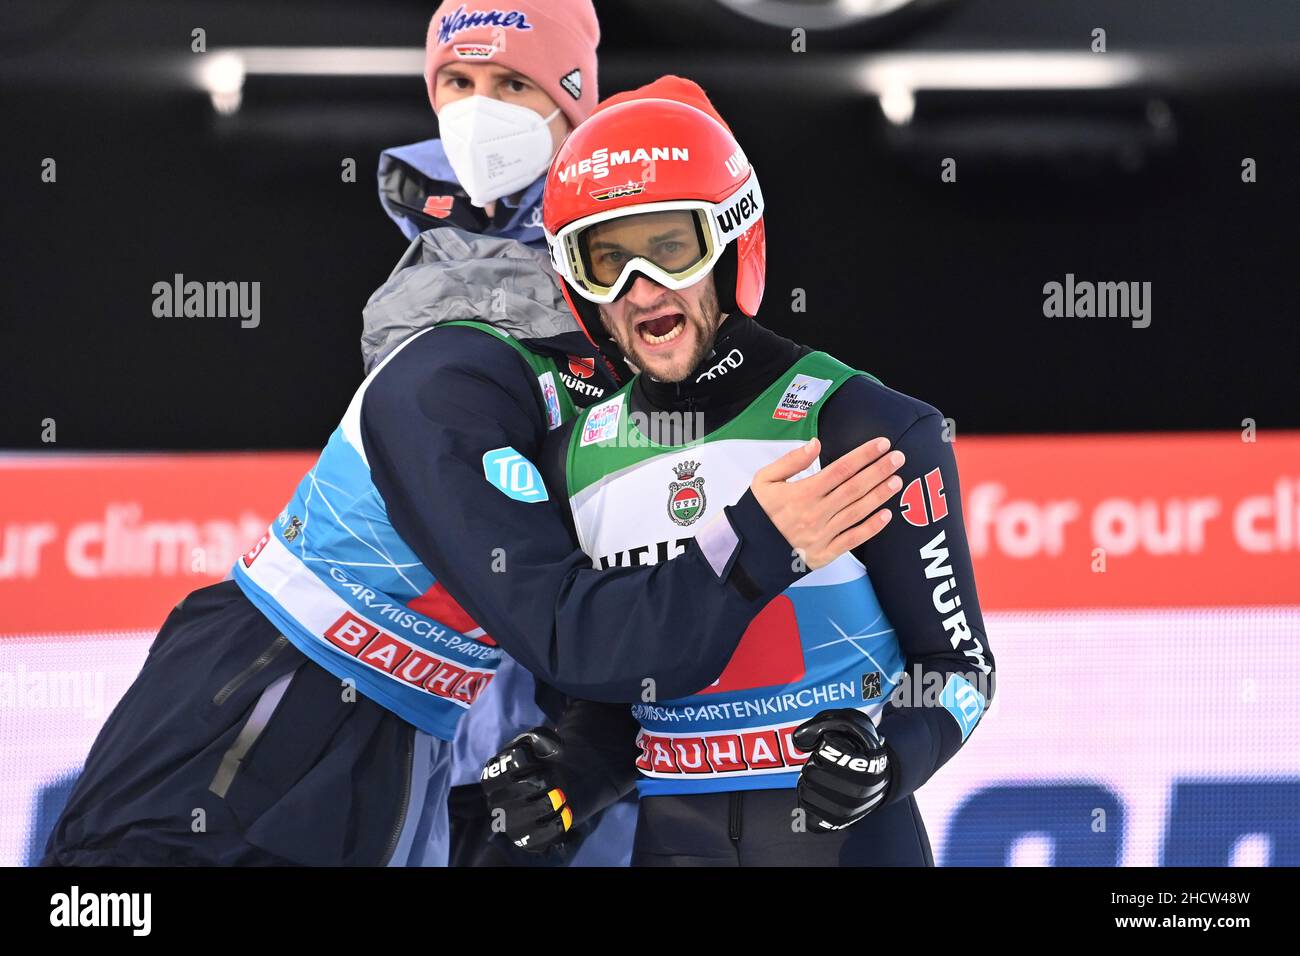 Markus EISENBICHLER (right, GER) with Stephan LEYHE (GER), back: Karl GEIGER (GER), jubilation, joy, enthusiasm, action, ski jumping, 70th International Four Hills Tournament 2021/22, New Year's jumping in Garmisch Partenkirchen, Olympic hill on 01.01. 2022 Stock Photo